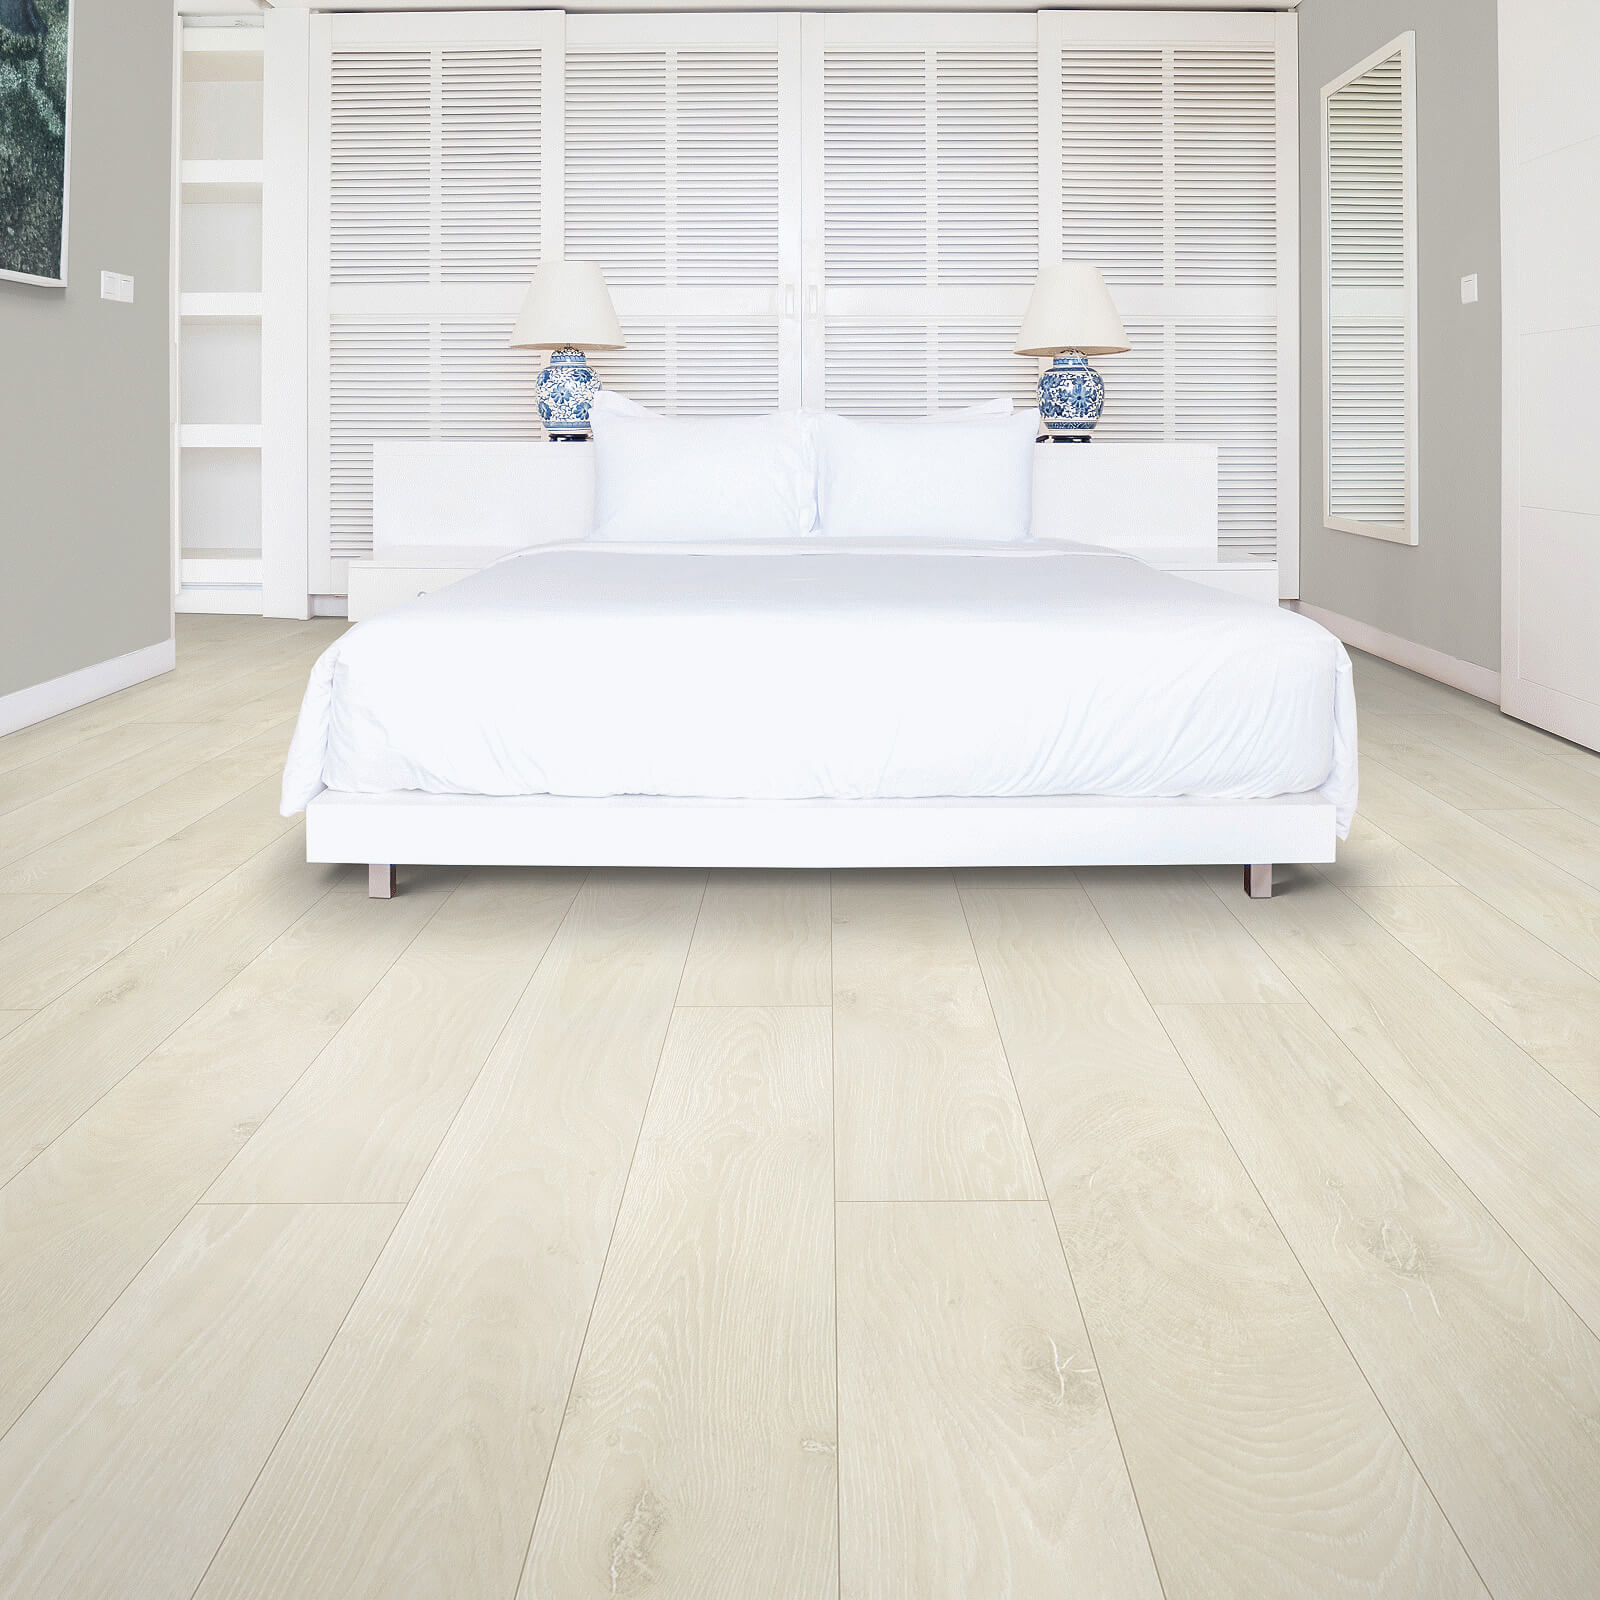 White interior for bedroom | Wellston Decorating Center, Inc.